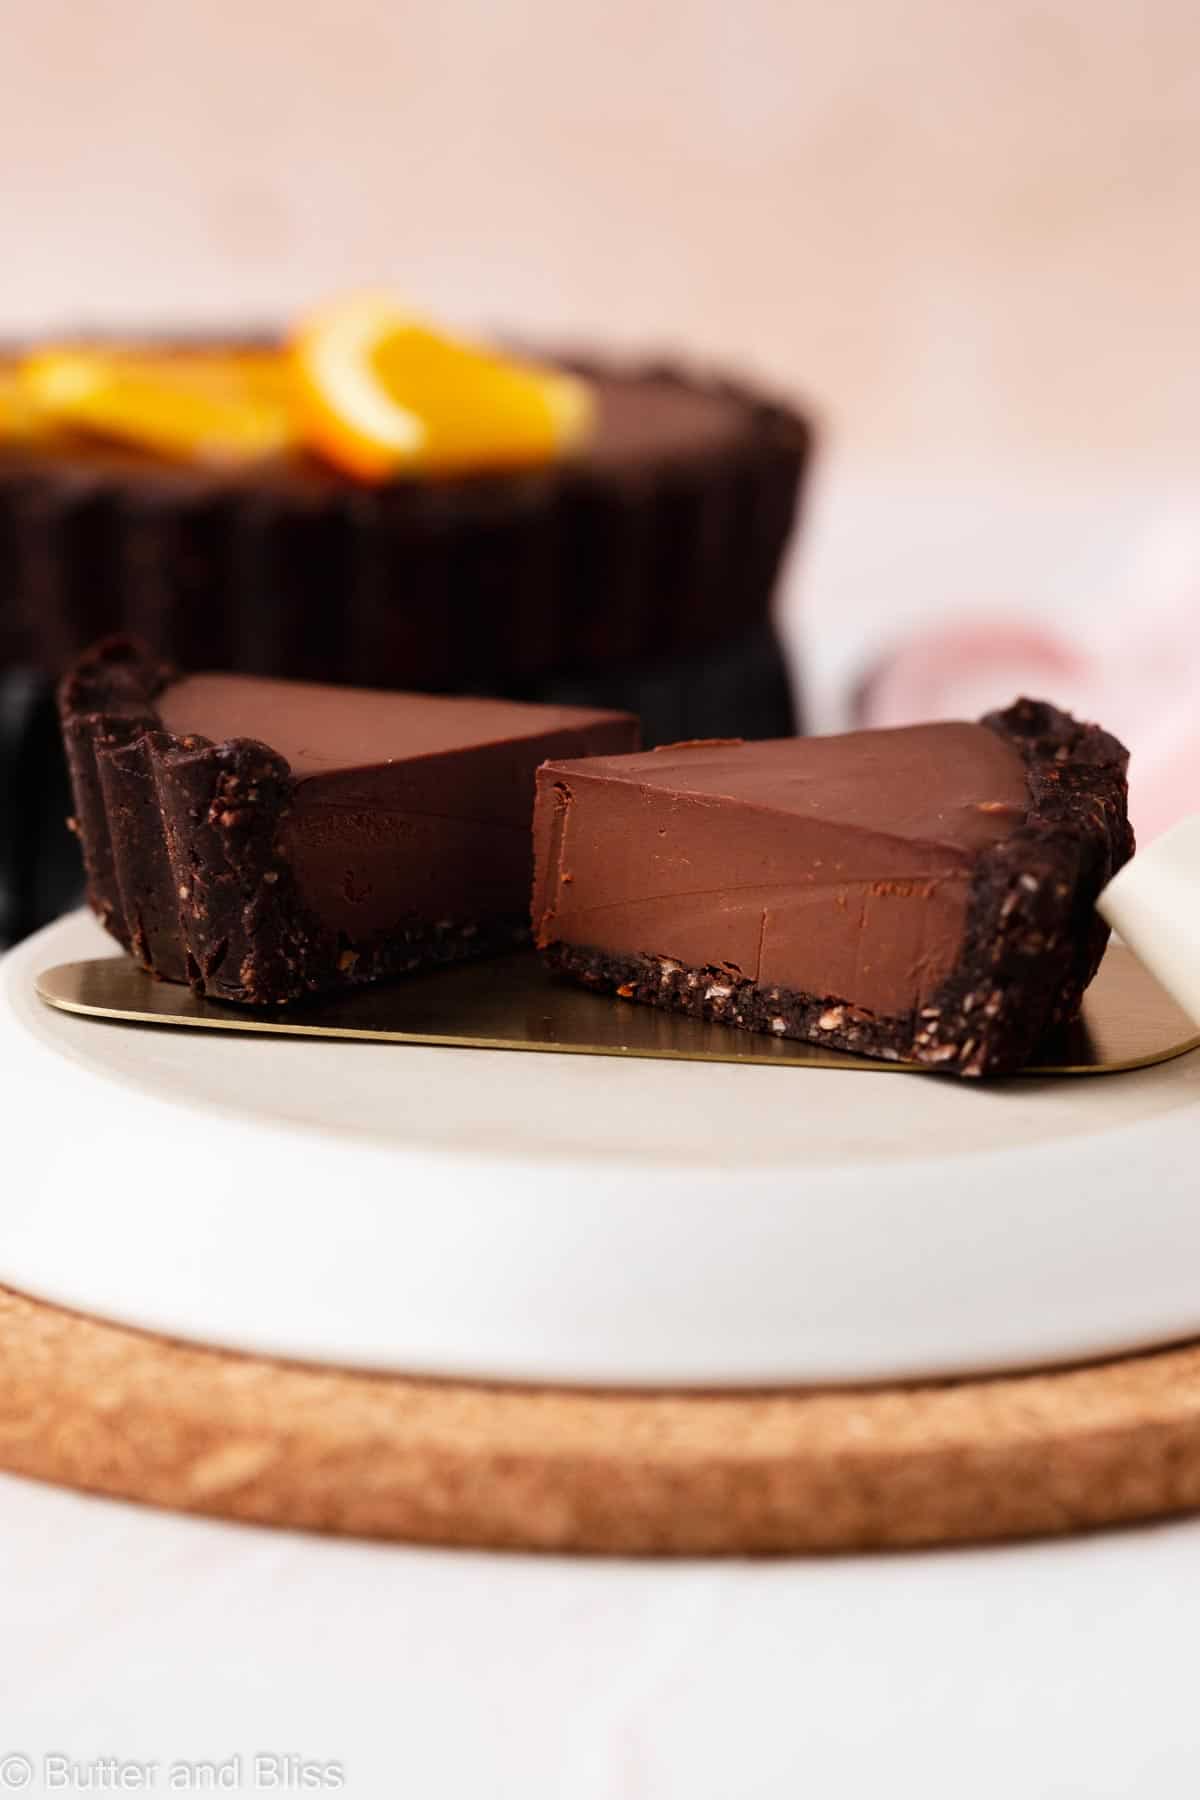 Small slices of chocolate orange gluten free tart on a cake server